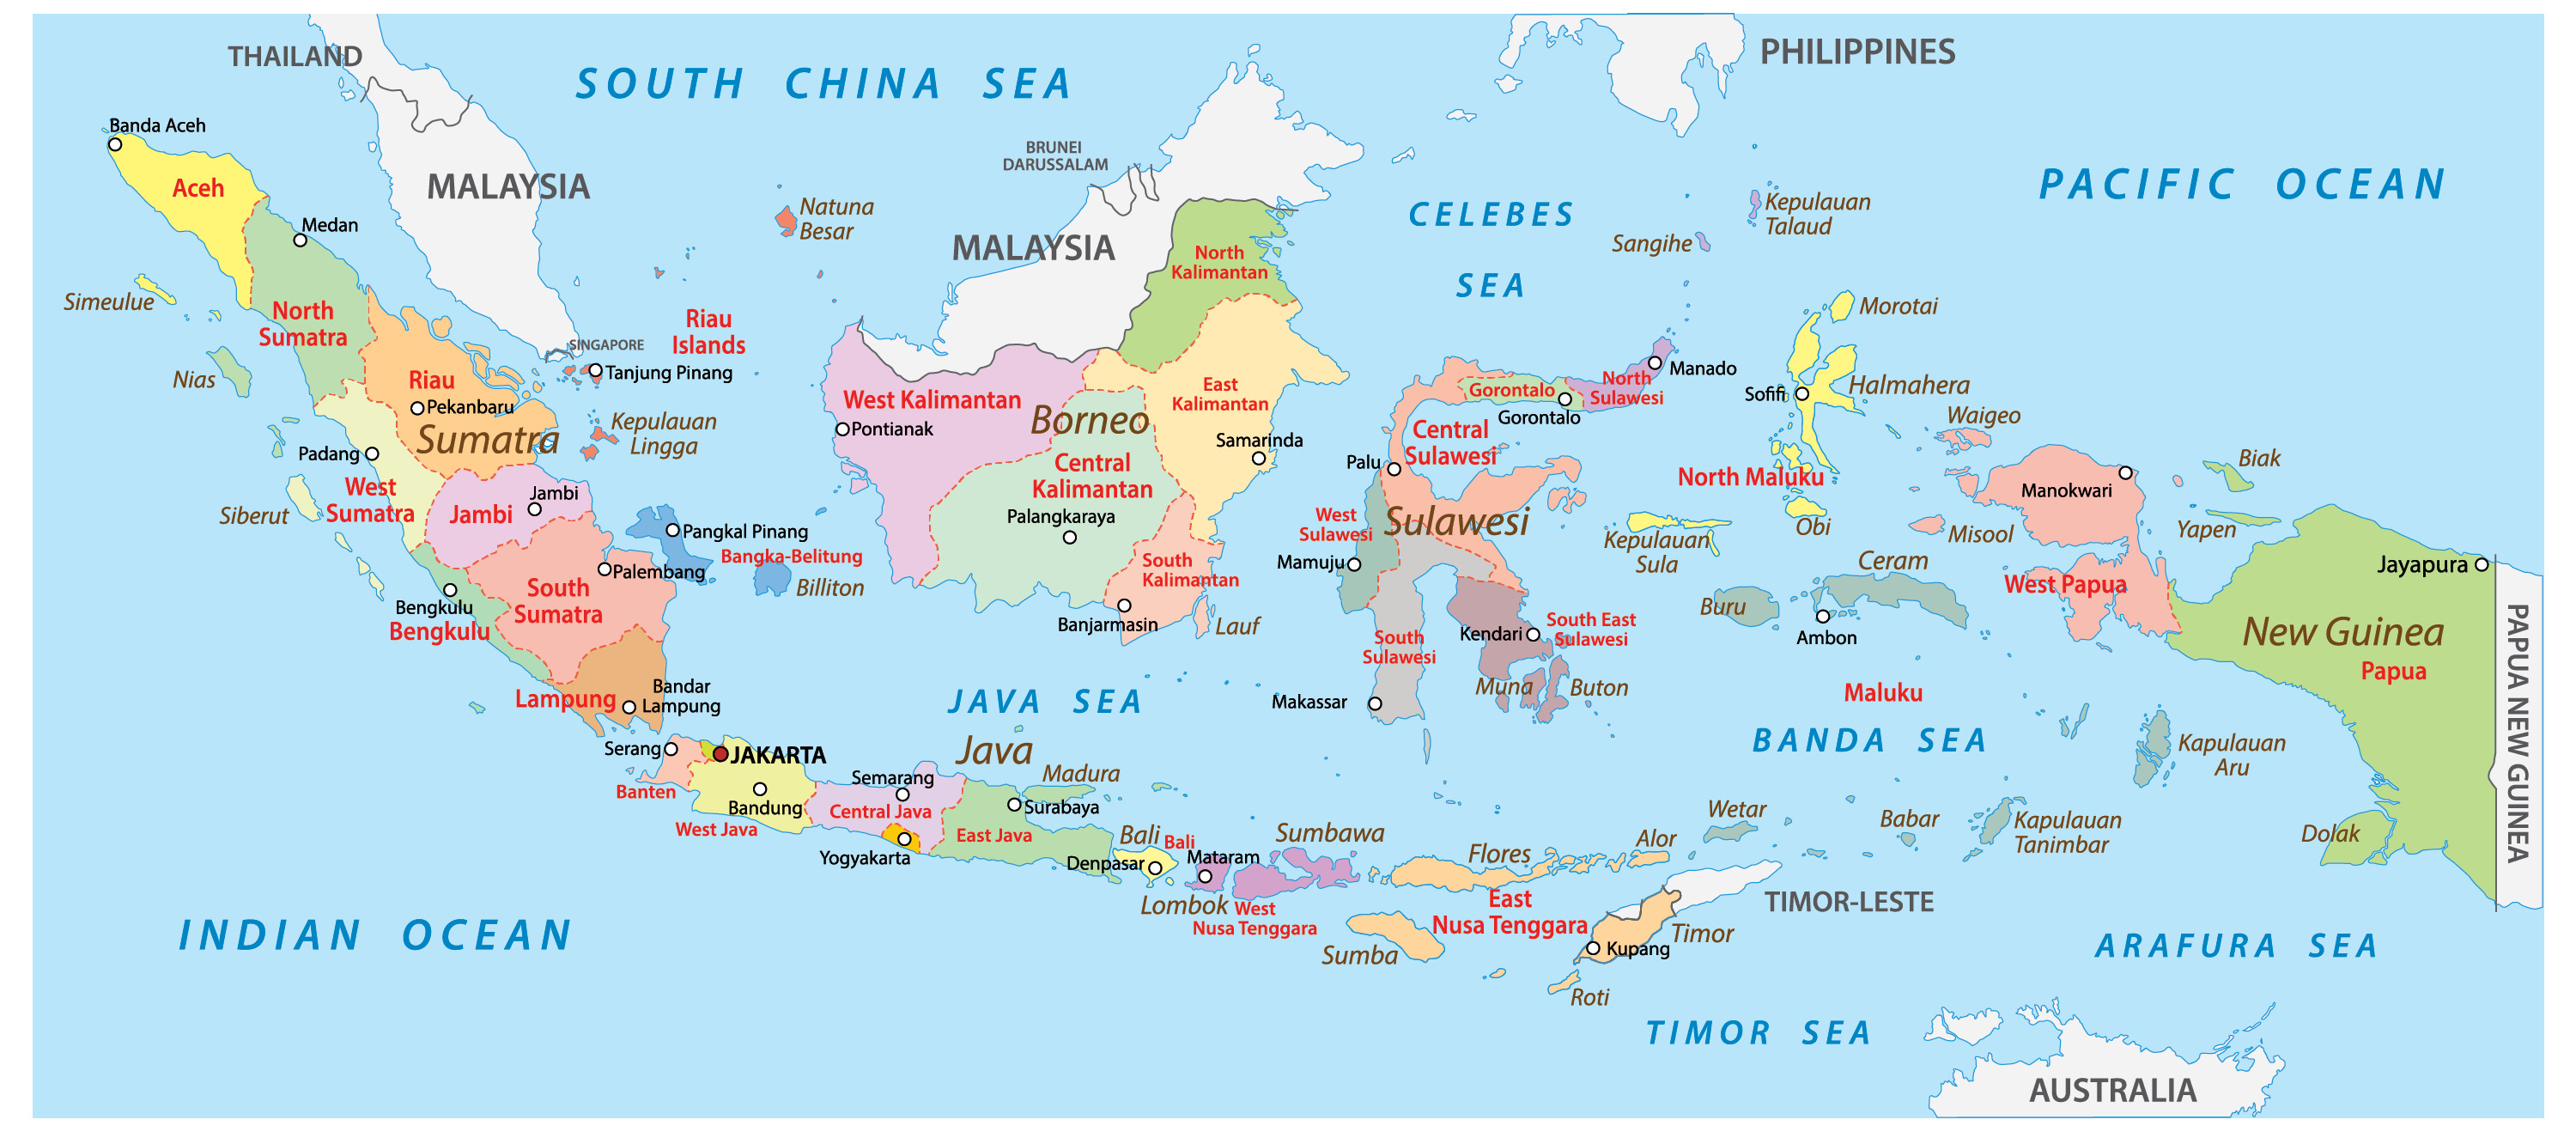 peta indonesia lengkap